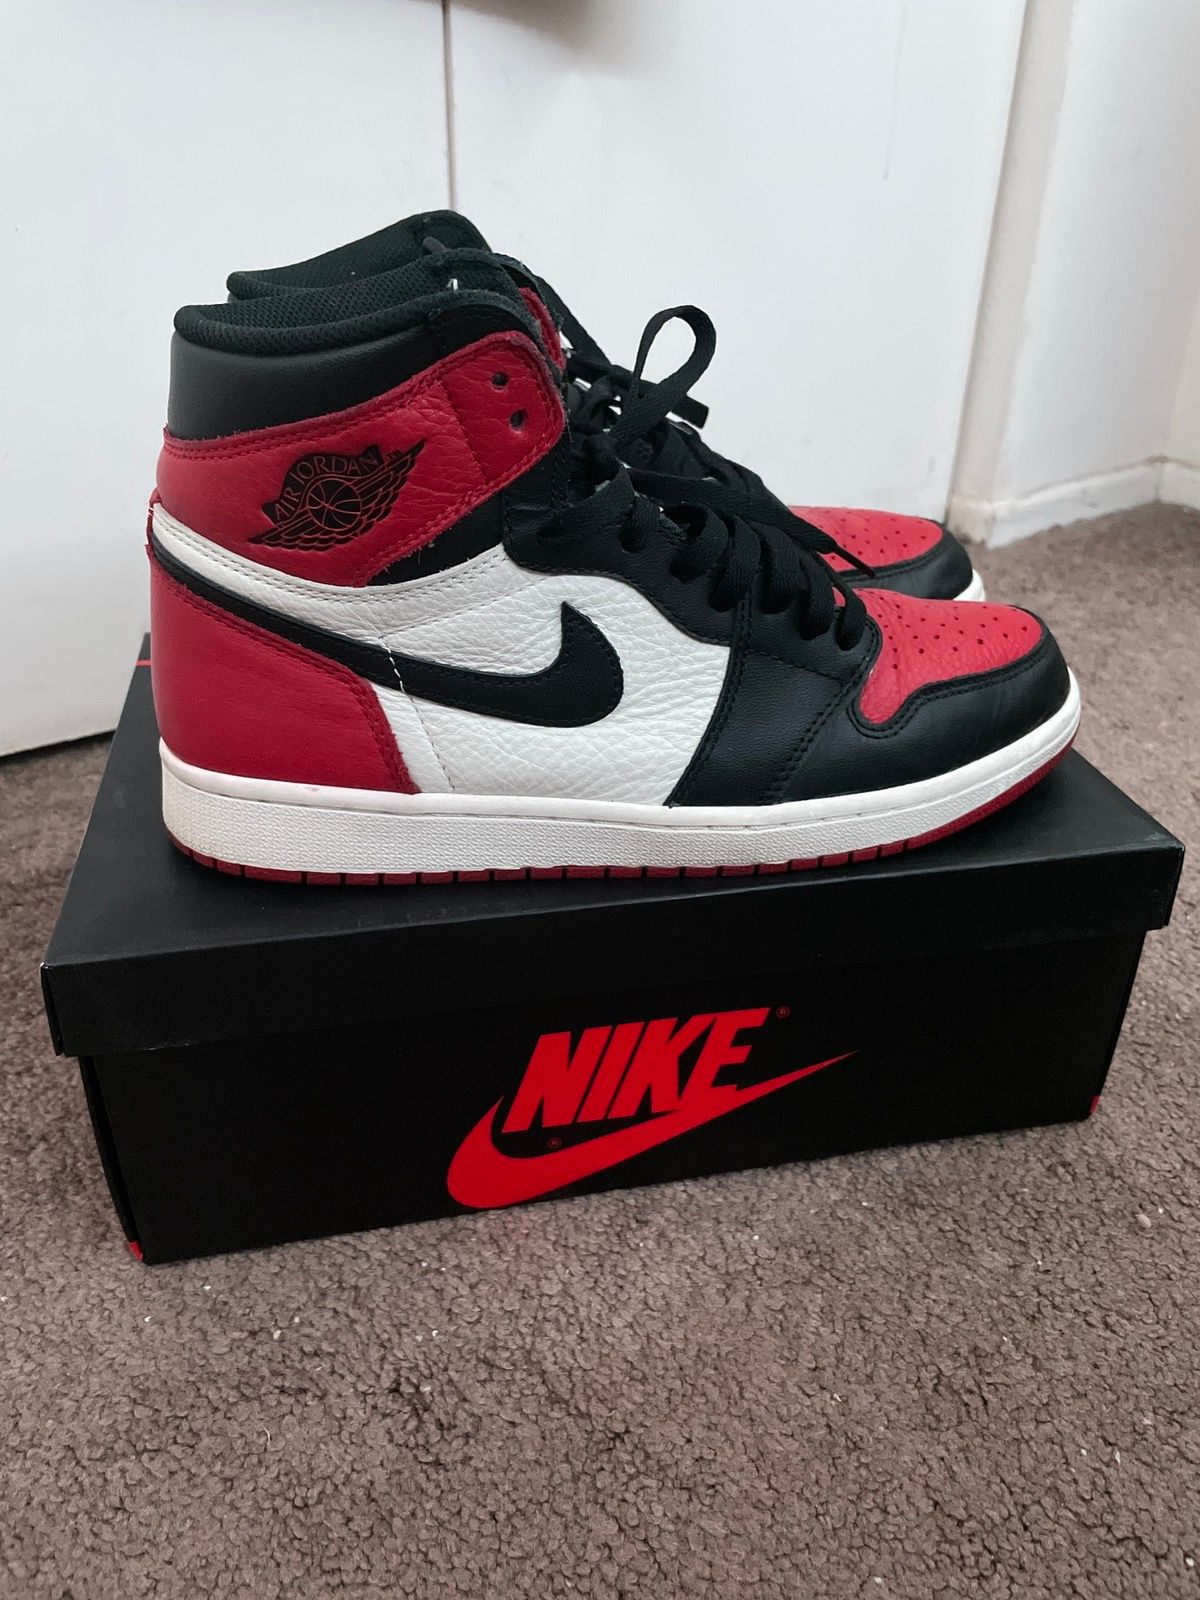 Pre-owned Jordan Nike Air Jordan 1 Retro High Og Bred Toe 2018 Shoes In Red